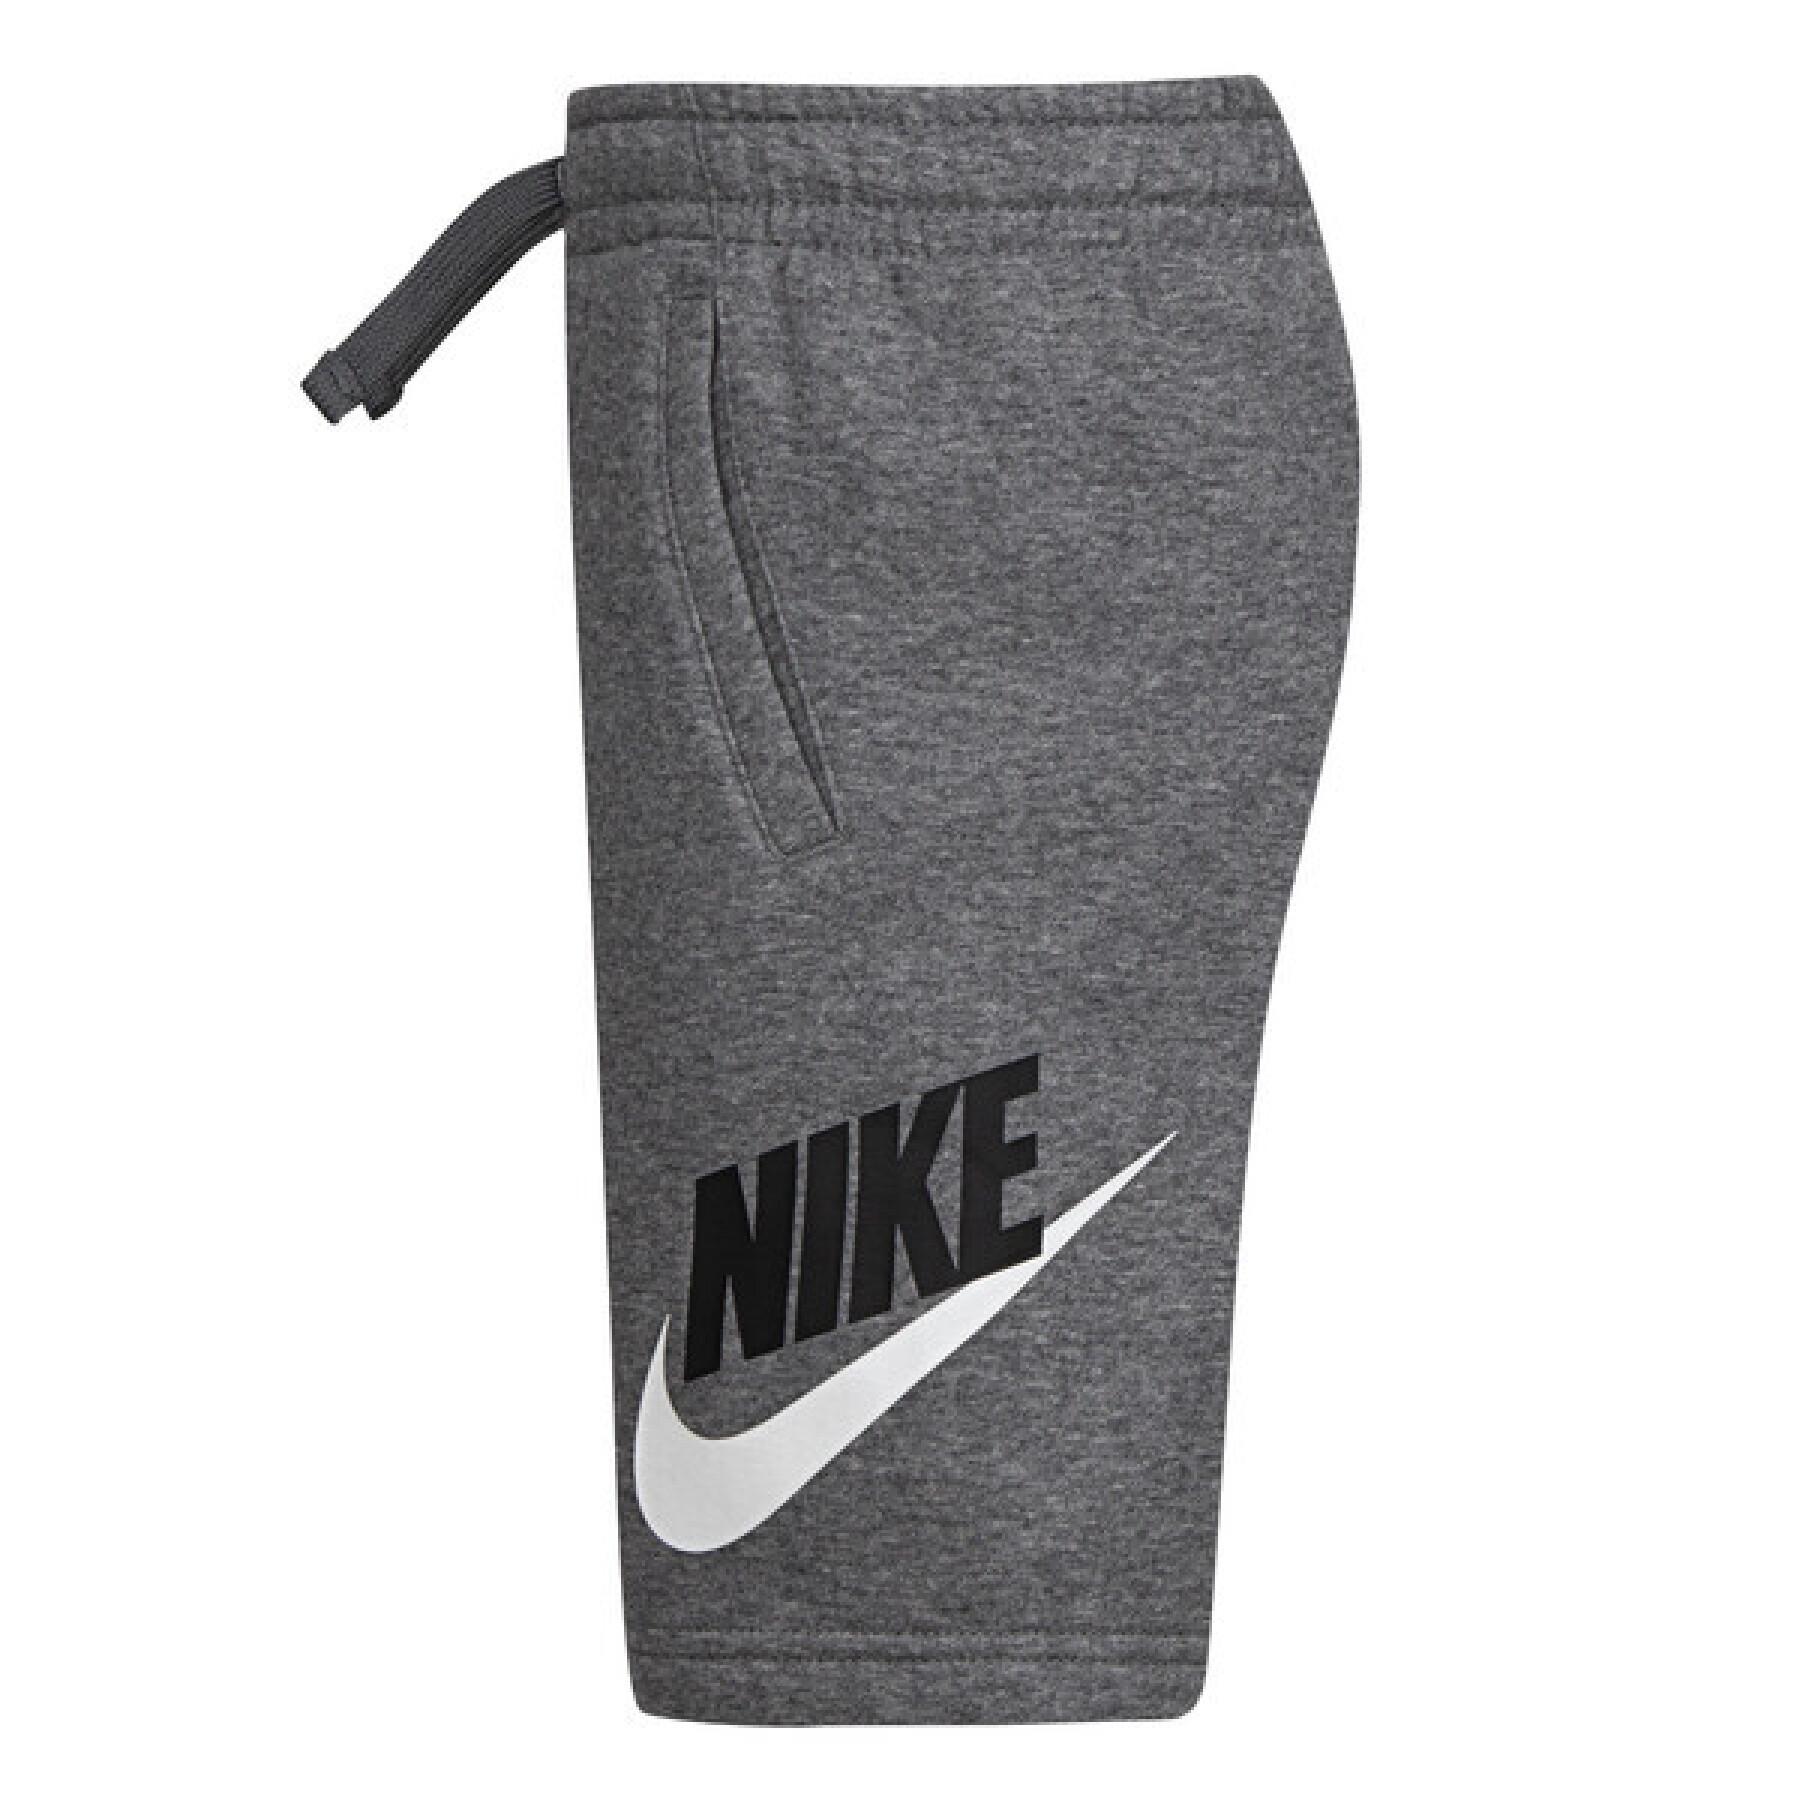 Brands FT - Children\'s Lifestyle Nike HBR - Nike - Club shorts